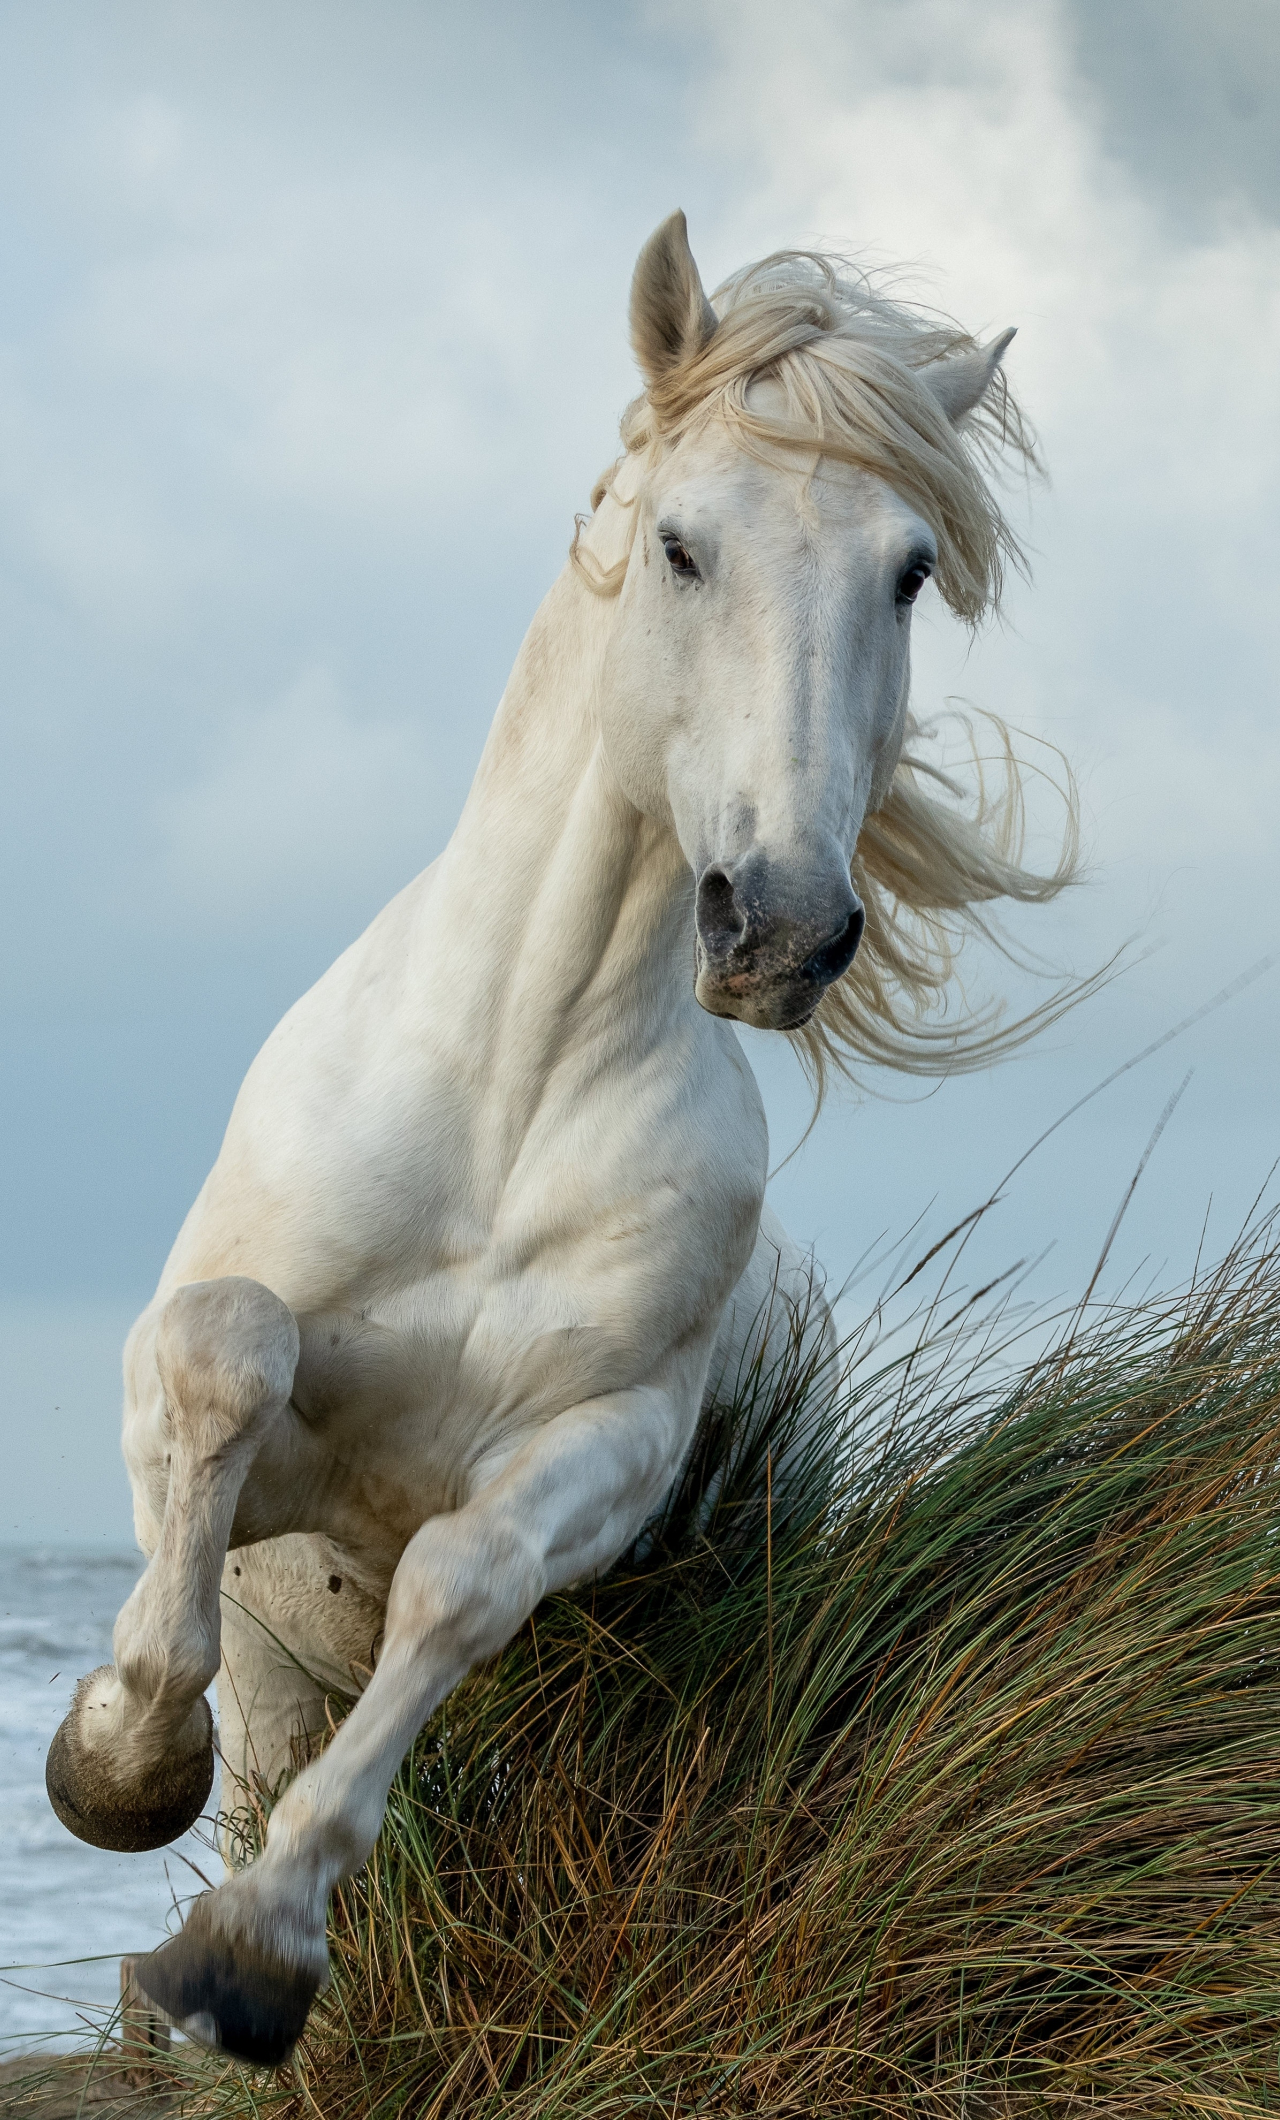 Download wallpaper 1280x2120 white horse, run, animal, iphone 6 plus,  1280x2120 hd background, 26277